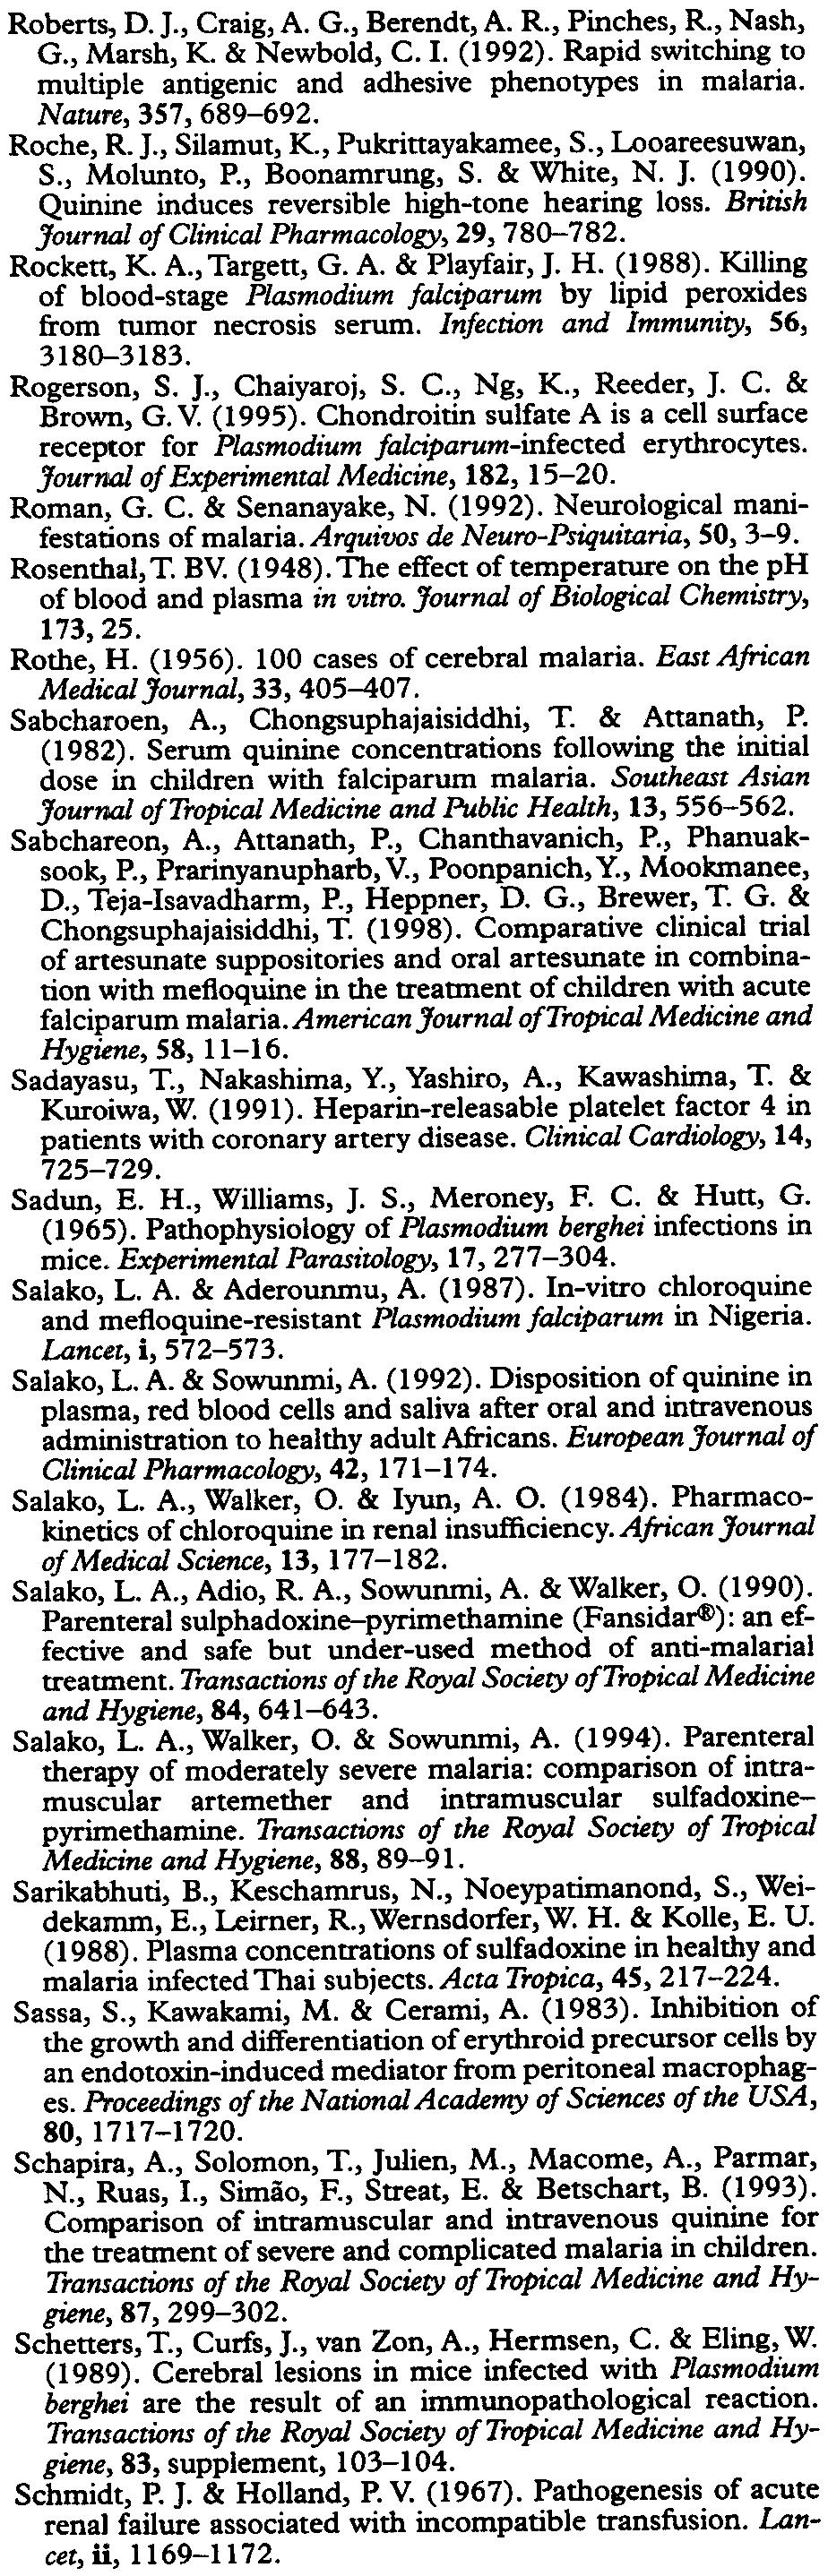 TRANSAC'11ONS OFTHE ROYAL SOCIETY OF TROPICAL MEDICINE AND HYGIENE (2000) 94, SUPPLEMENT 1 Sl/85 Pukrittayakamee, S., White, N. J., Clemens, R., Chittamas, S., Karges, H. E., Desakorn, V.